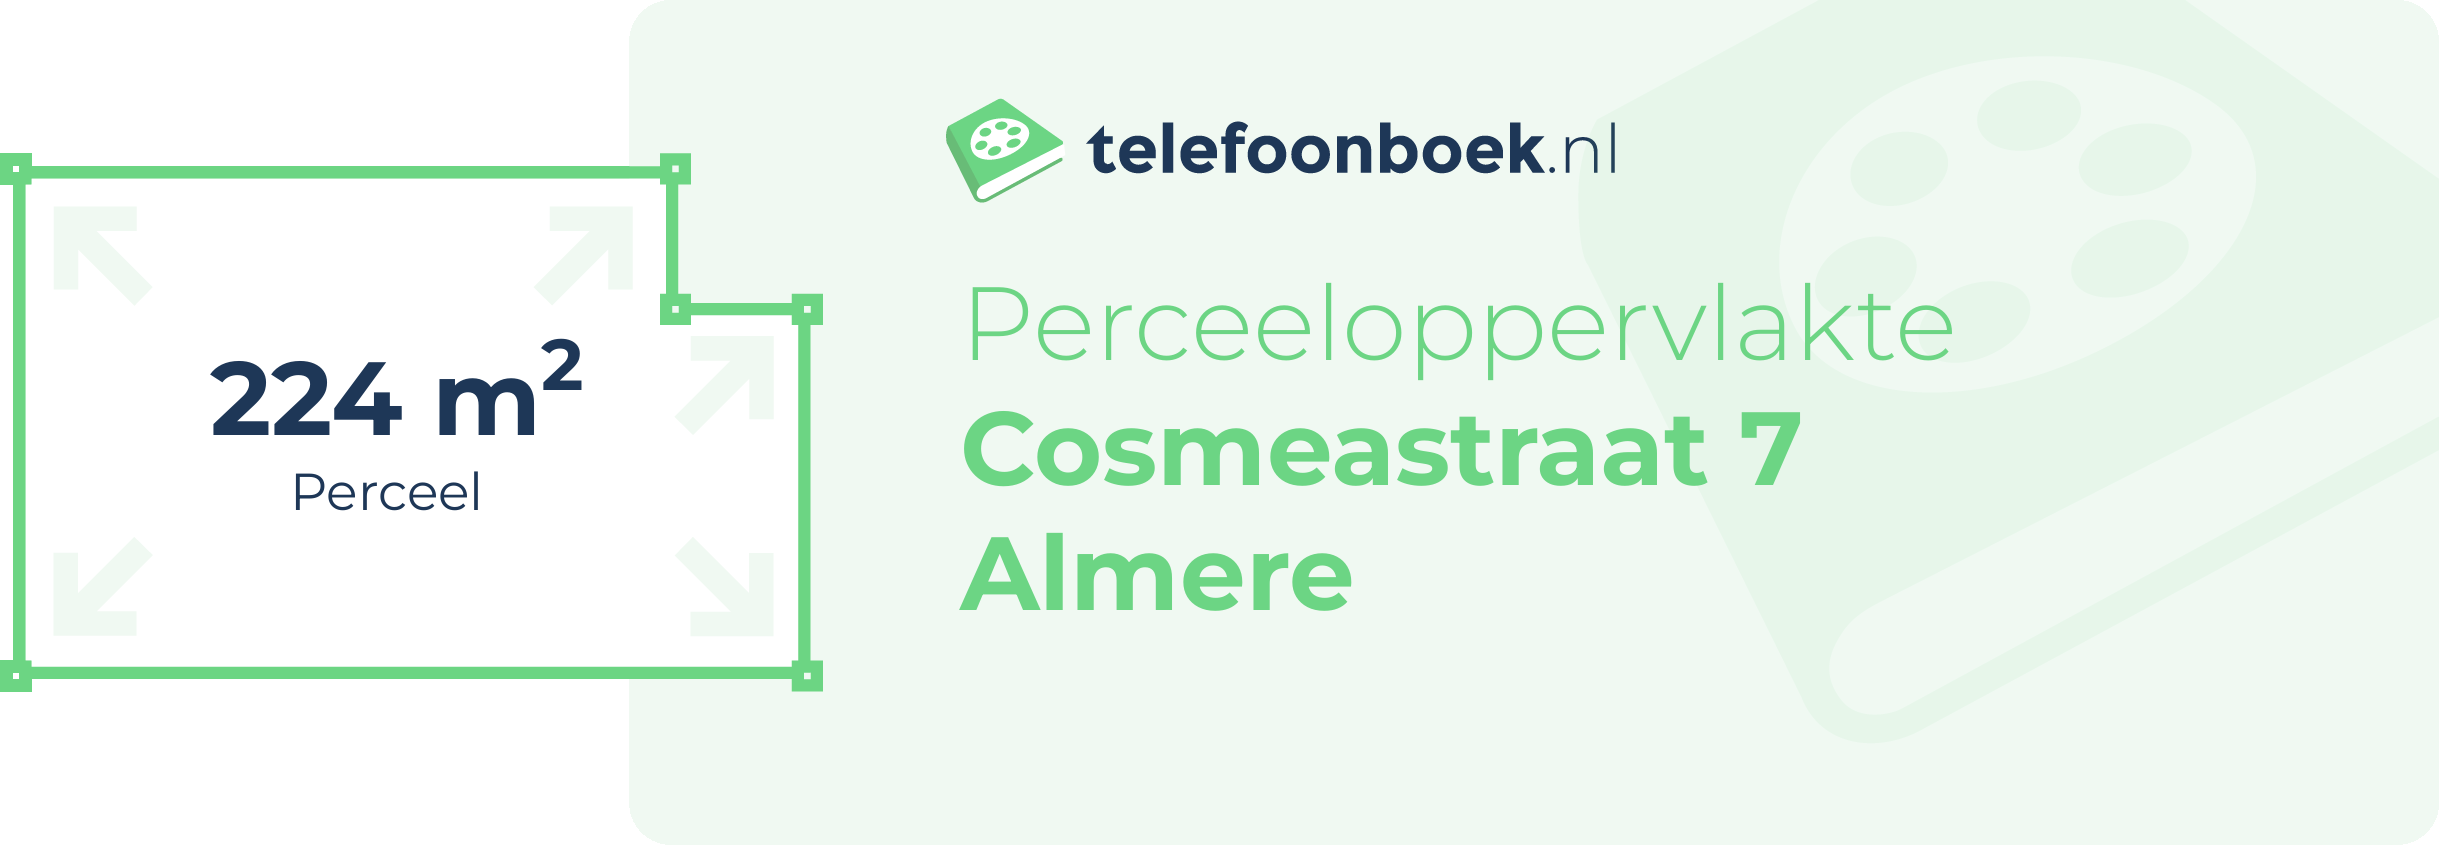 Perceeloppervlakte Cosmeastraat 7 Almere